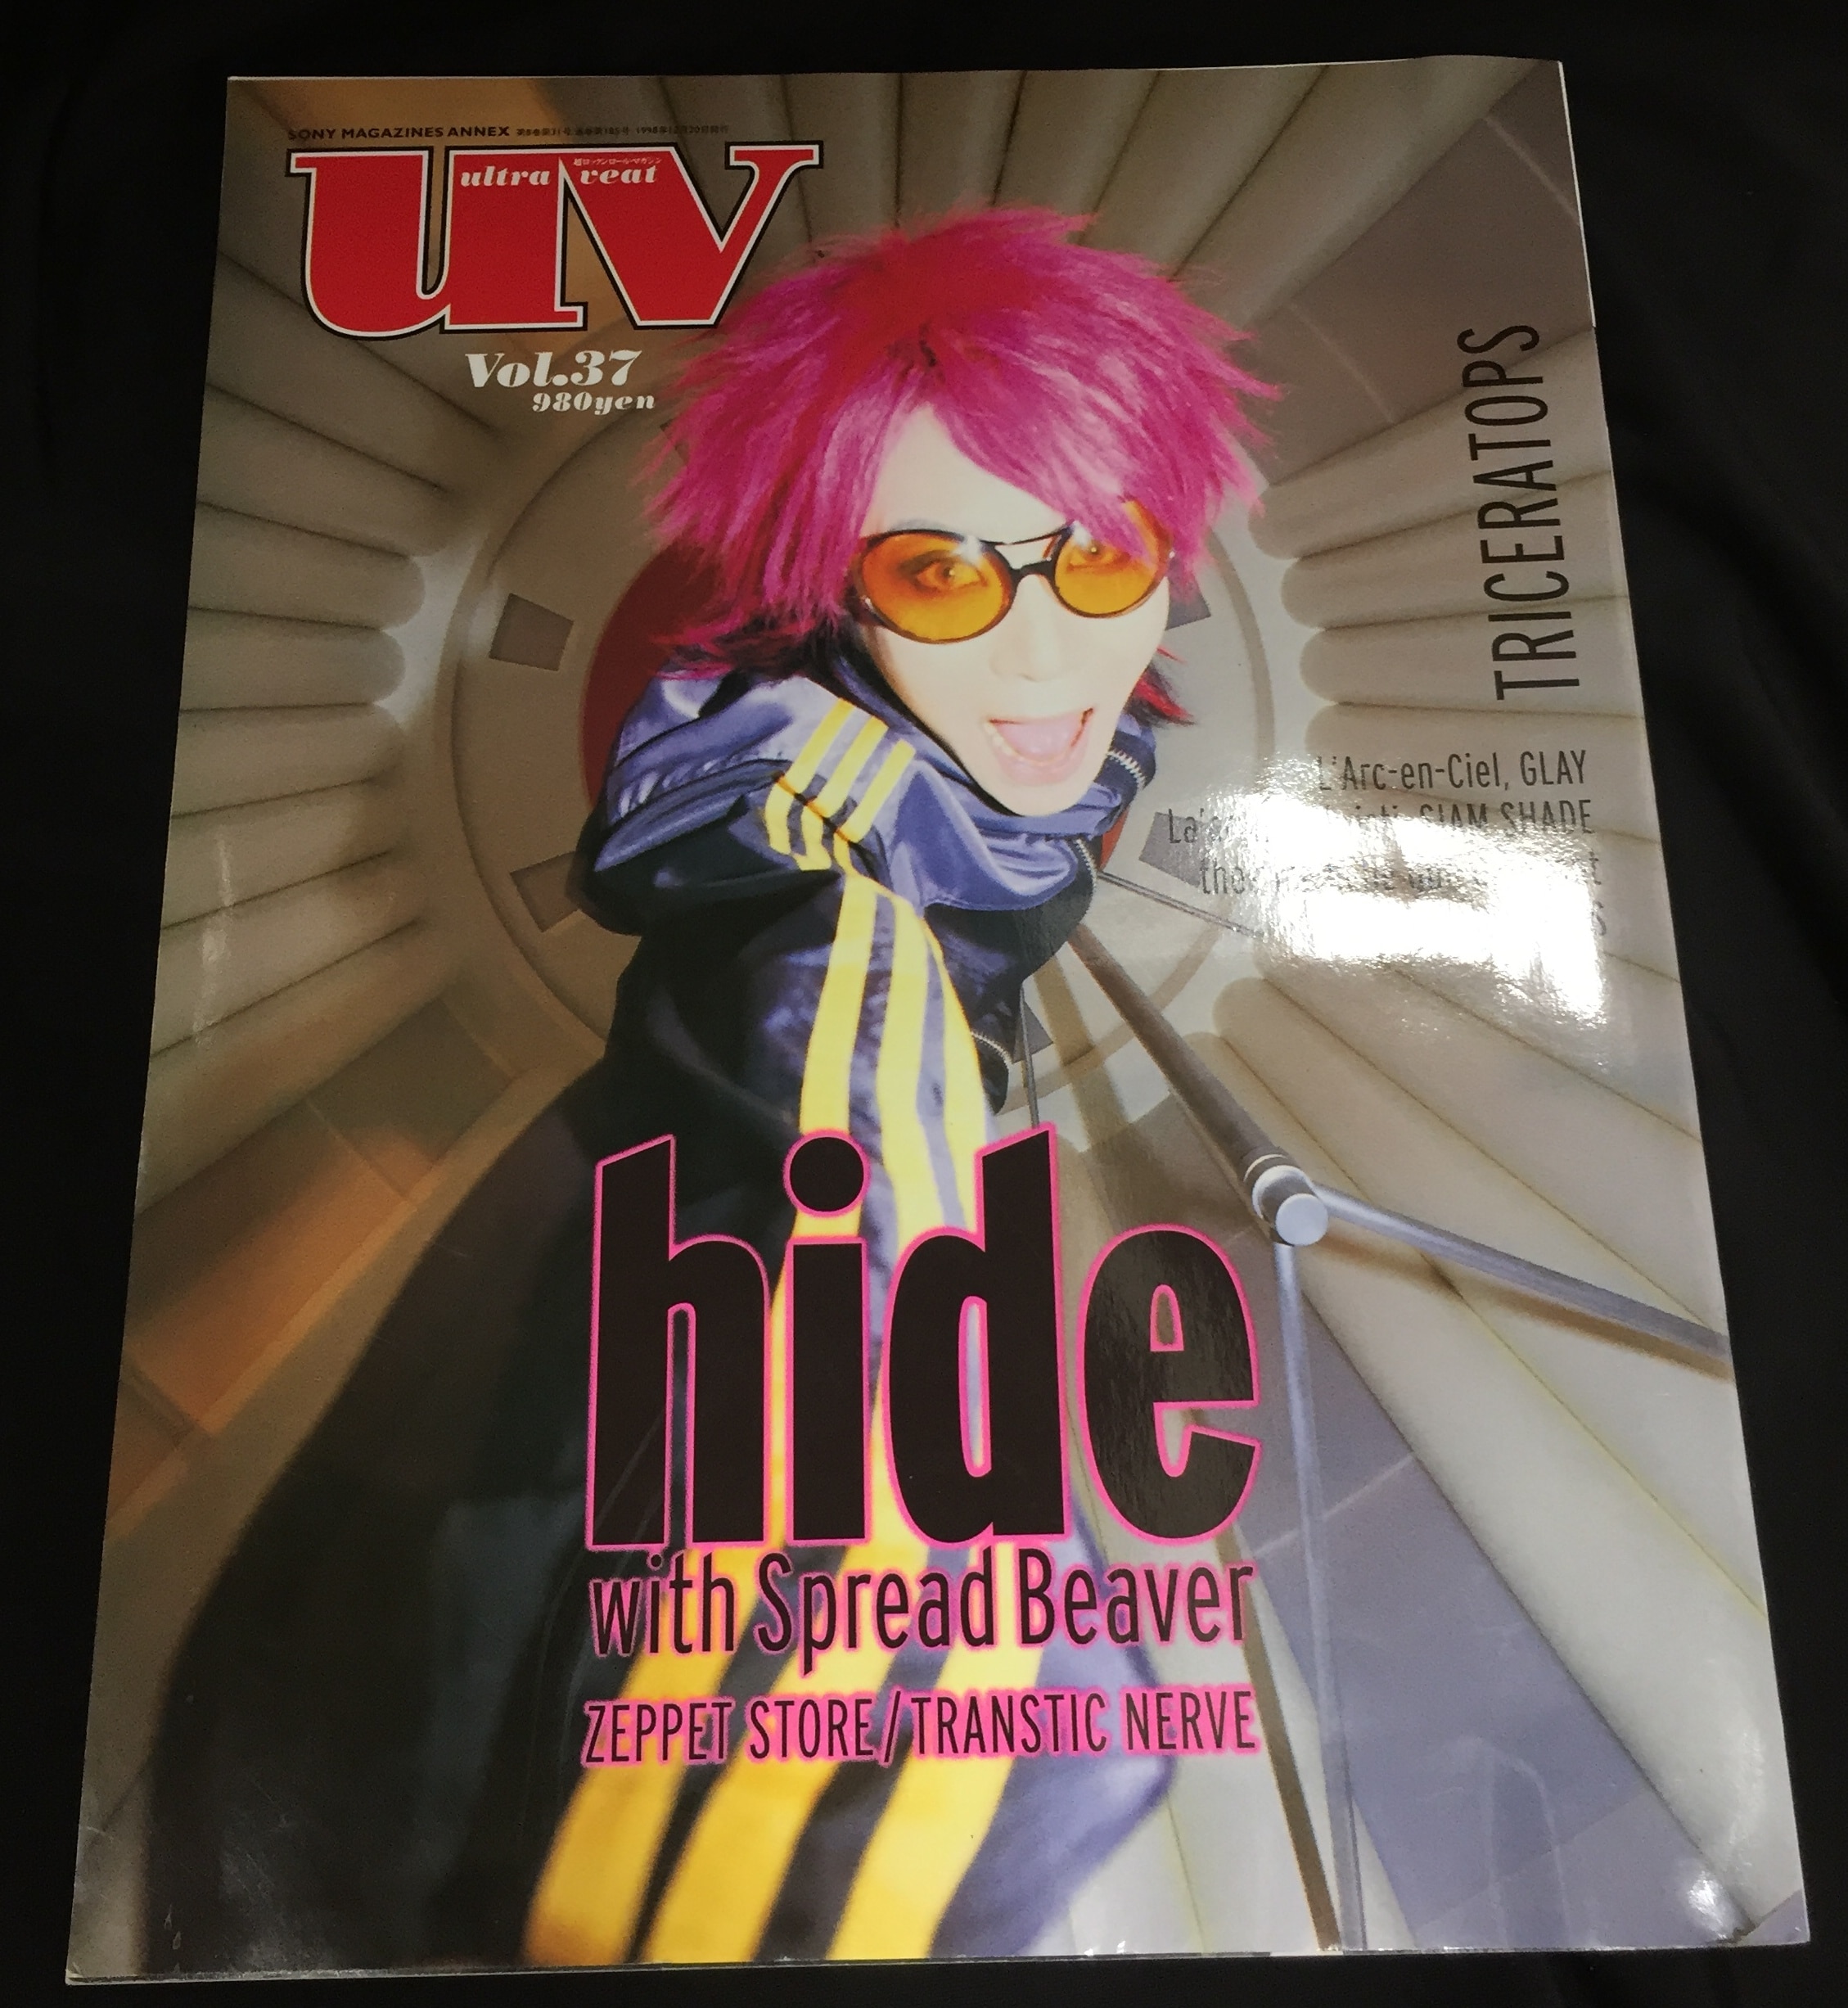 hide with Spread Beaver 1998年12月20日発行/雑誌 uv(ultra veat) Vol 